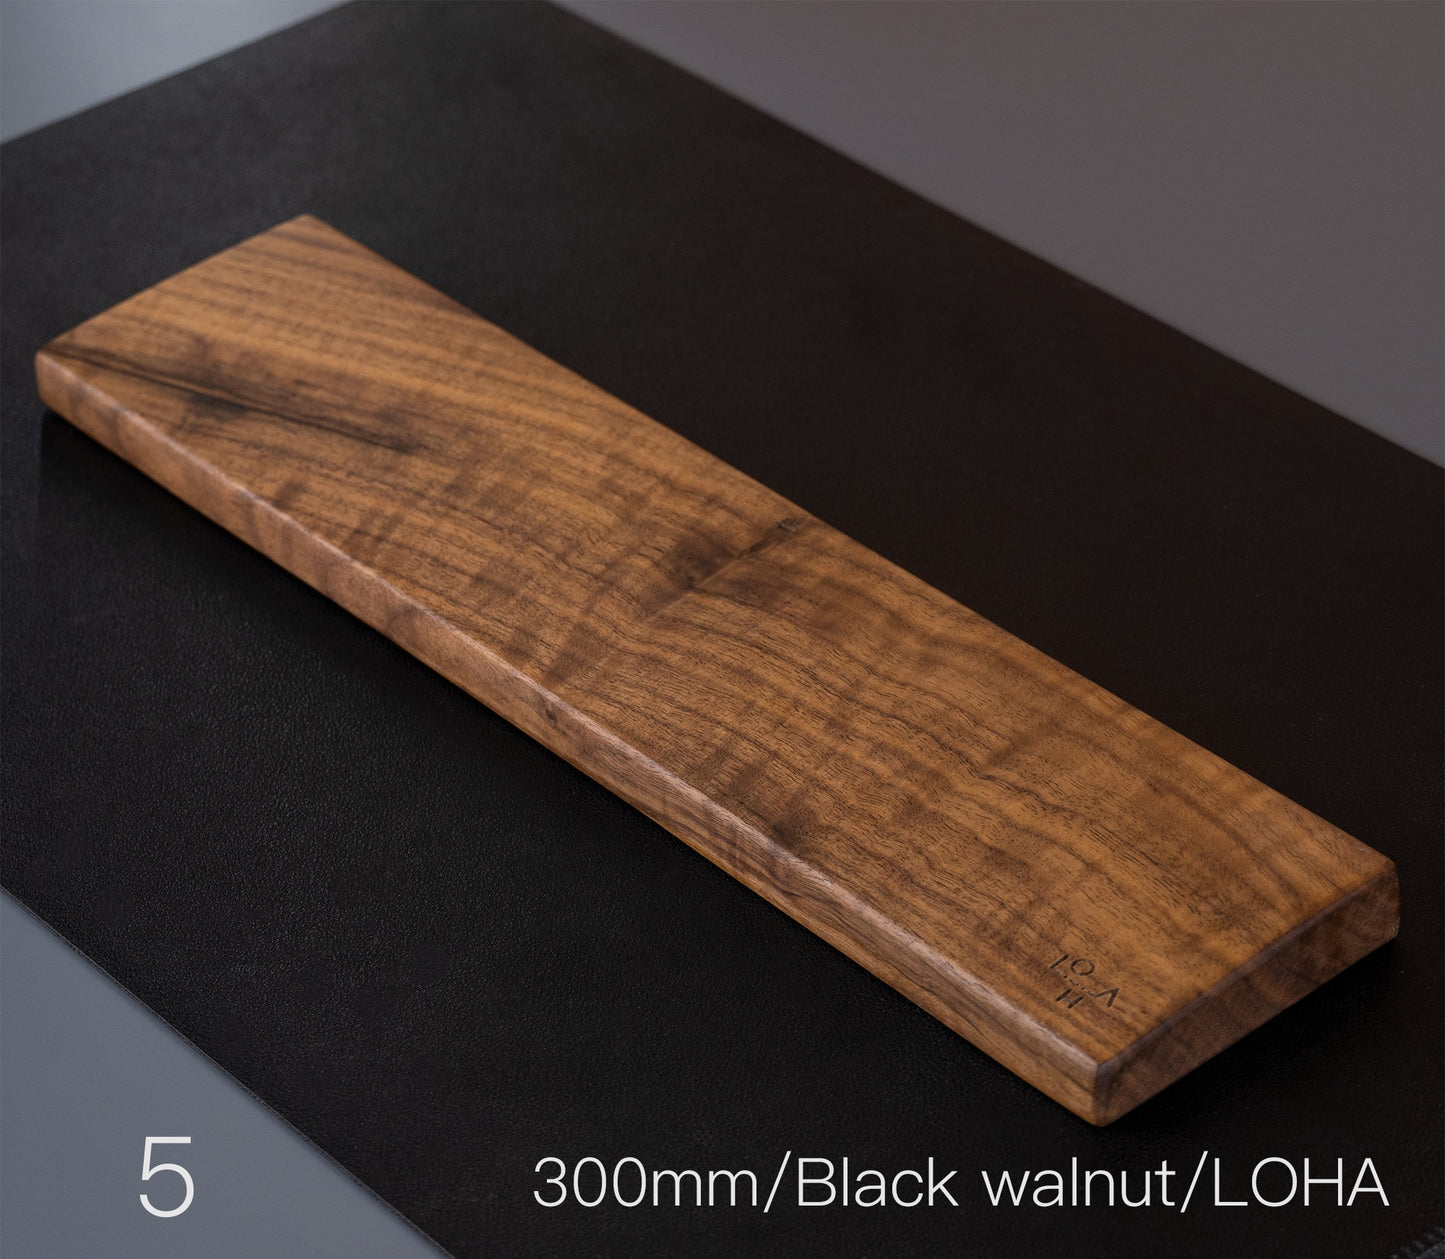 special-edition-walnut-wood-wrist-rest-5